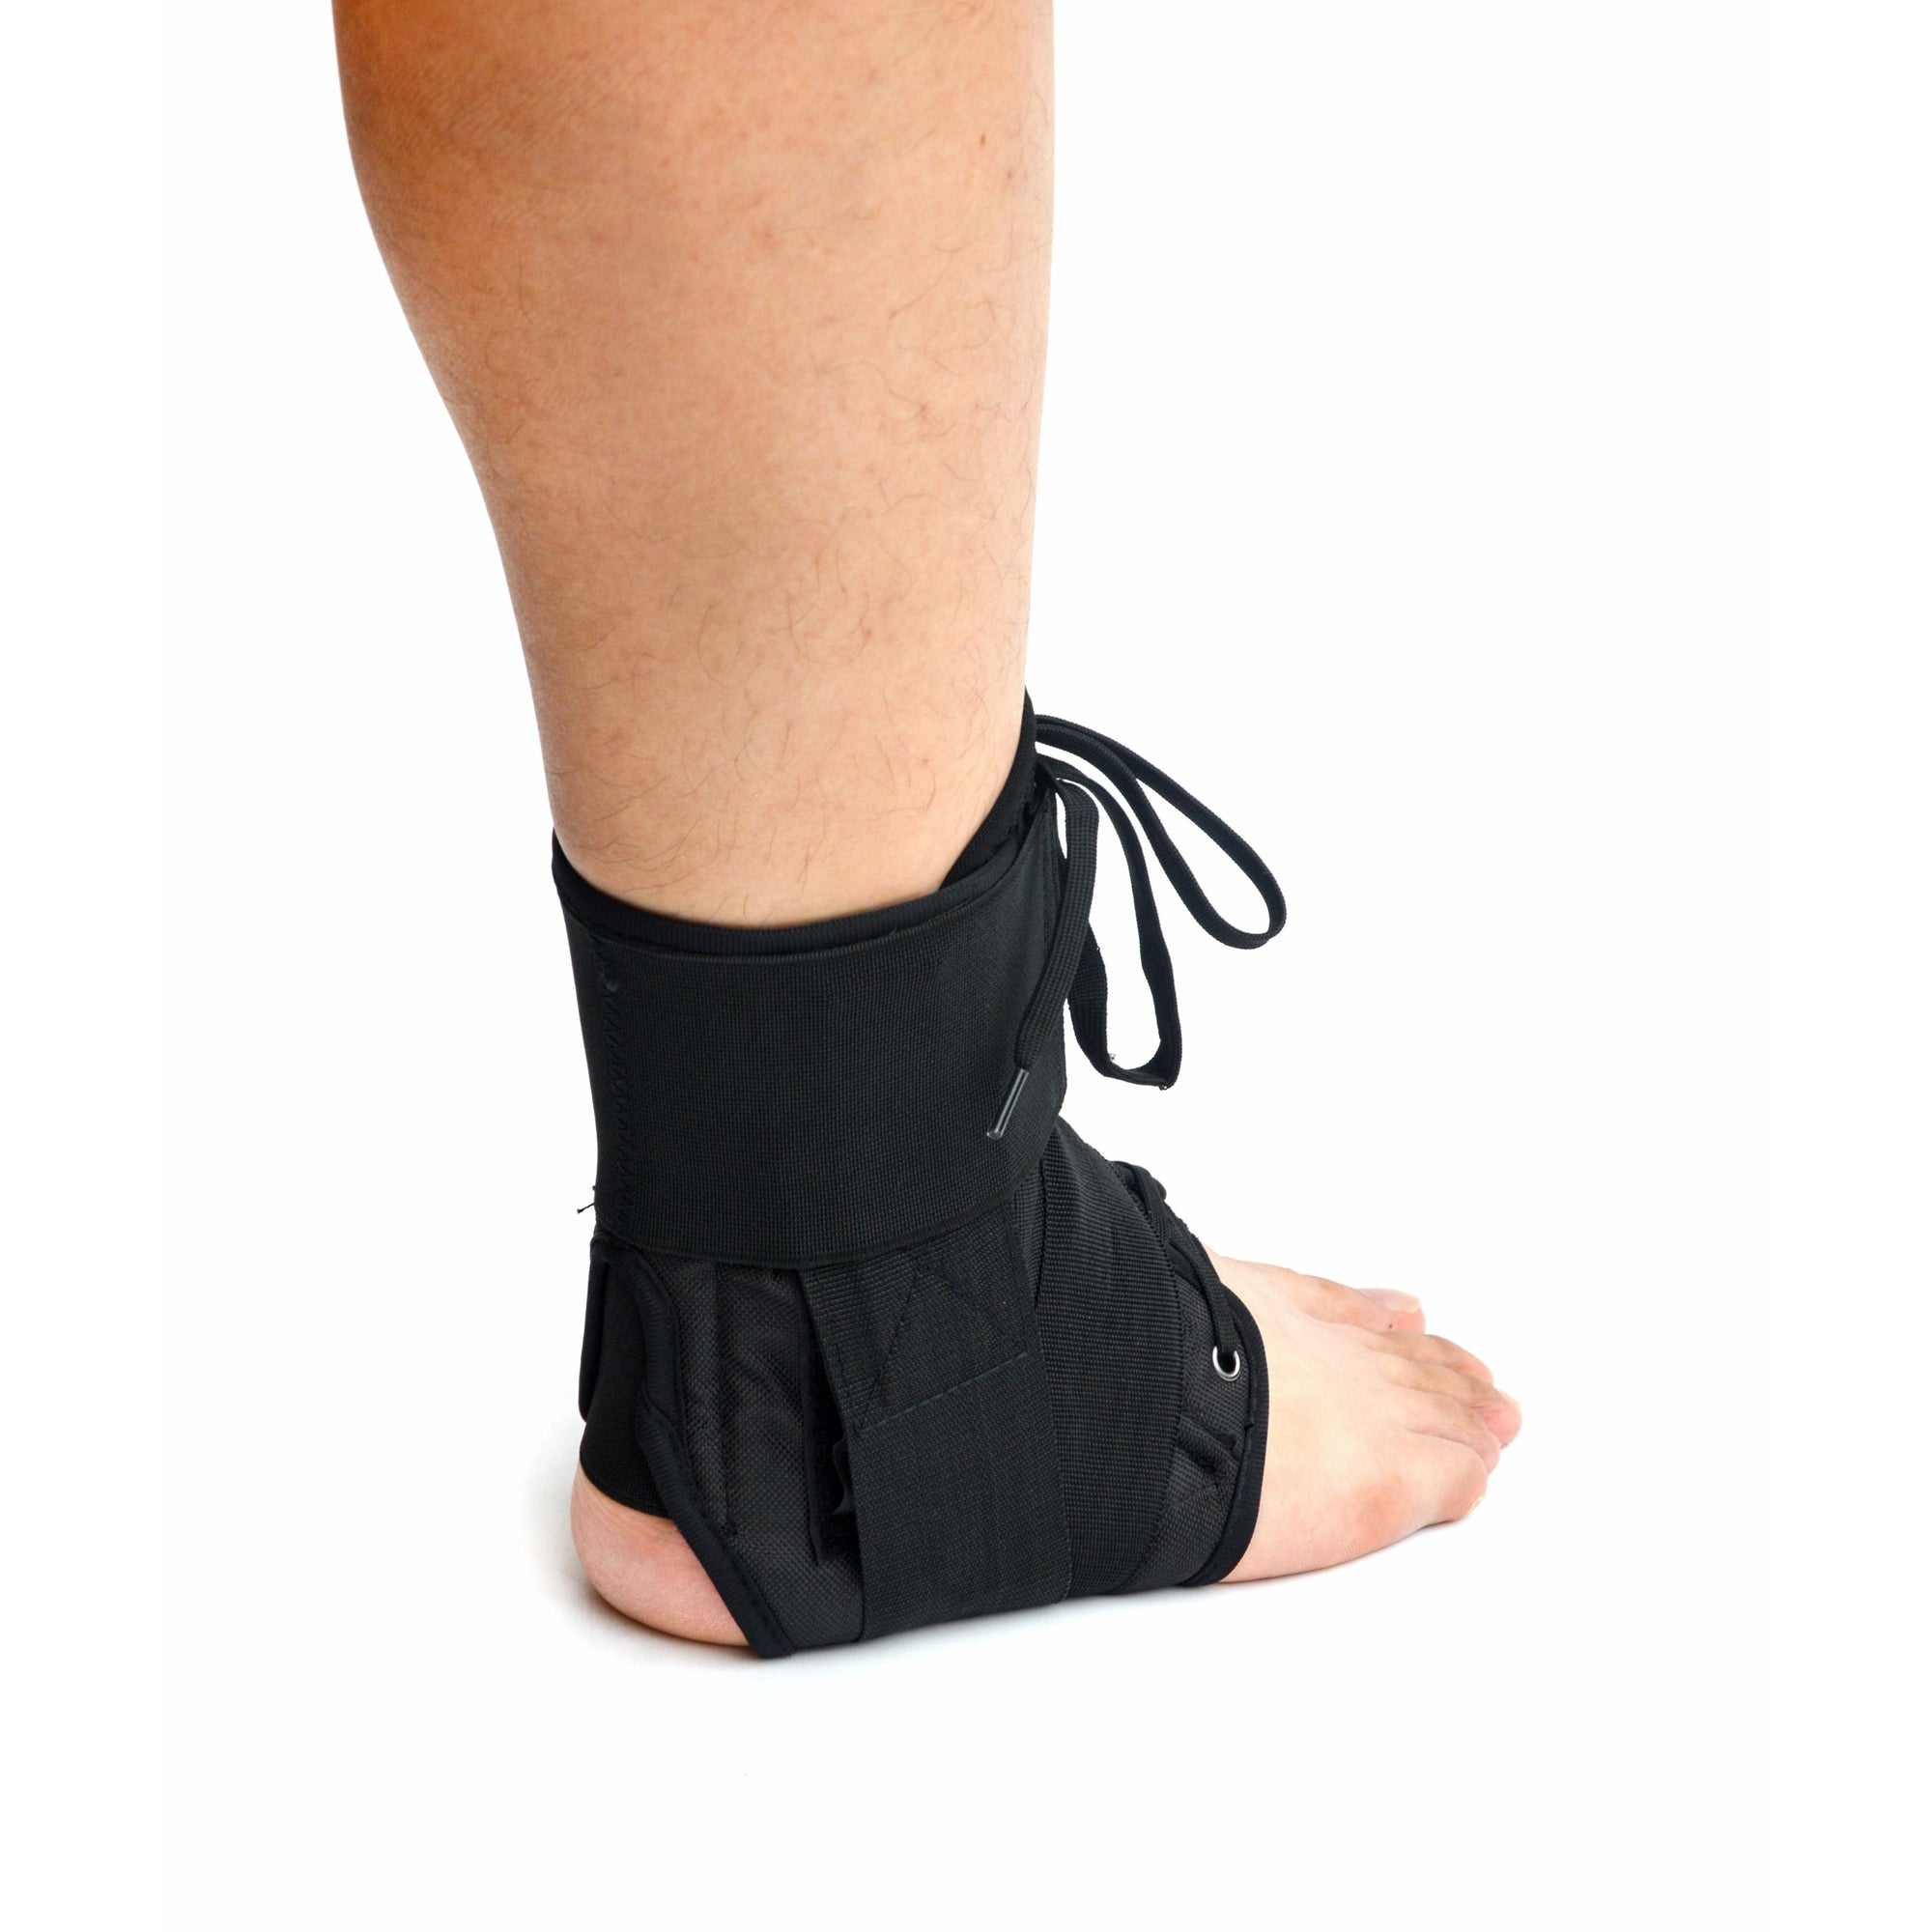 Ankle Brace Stabilizer - Ankle sprain & instability - LARGE